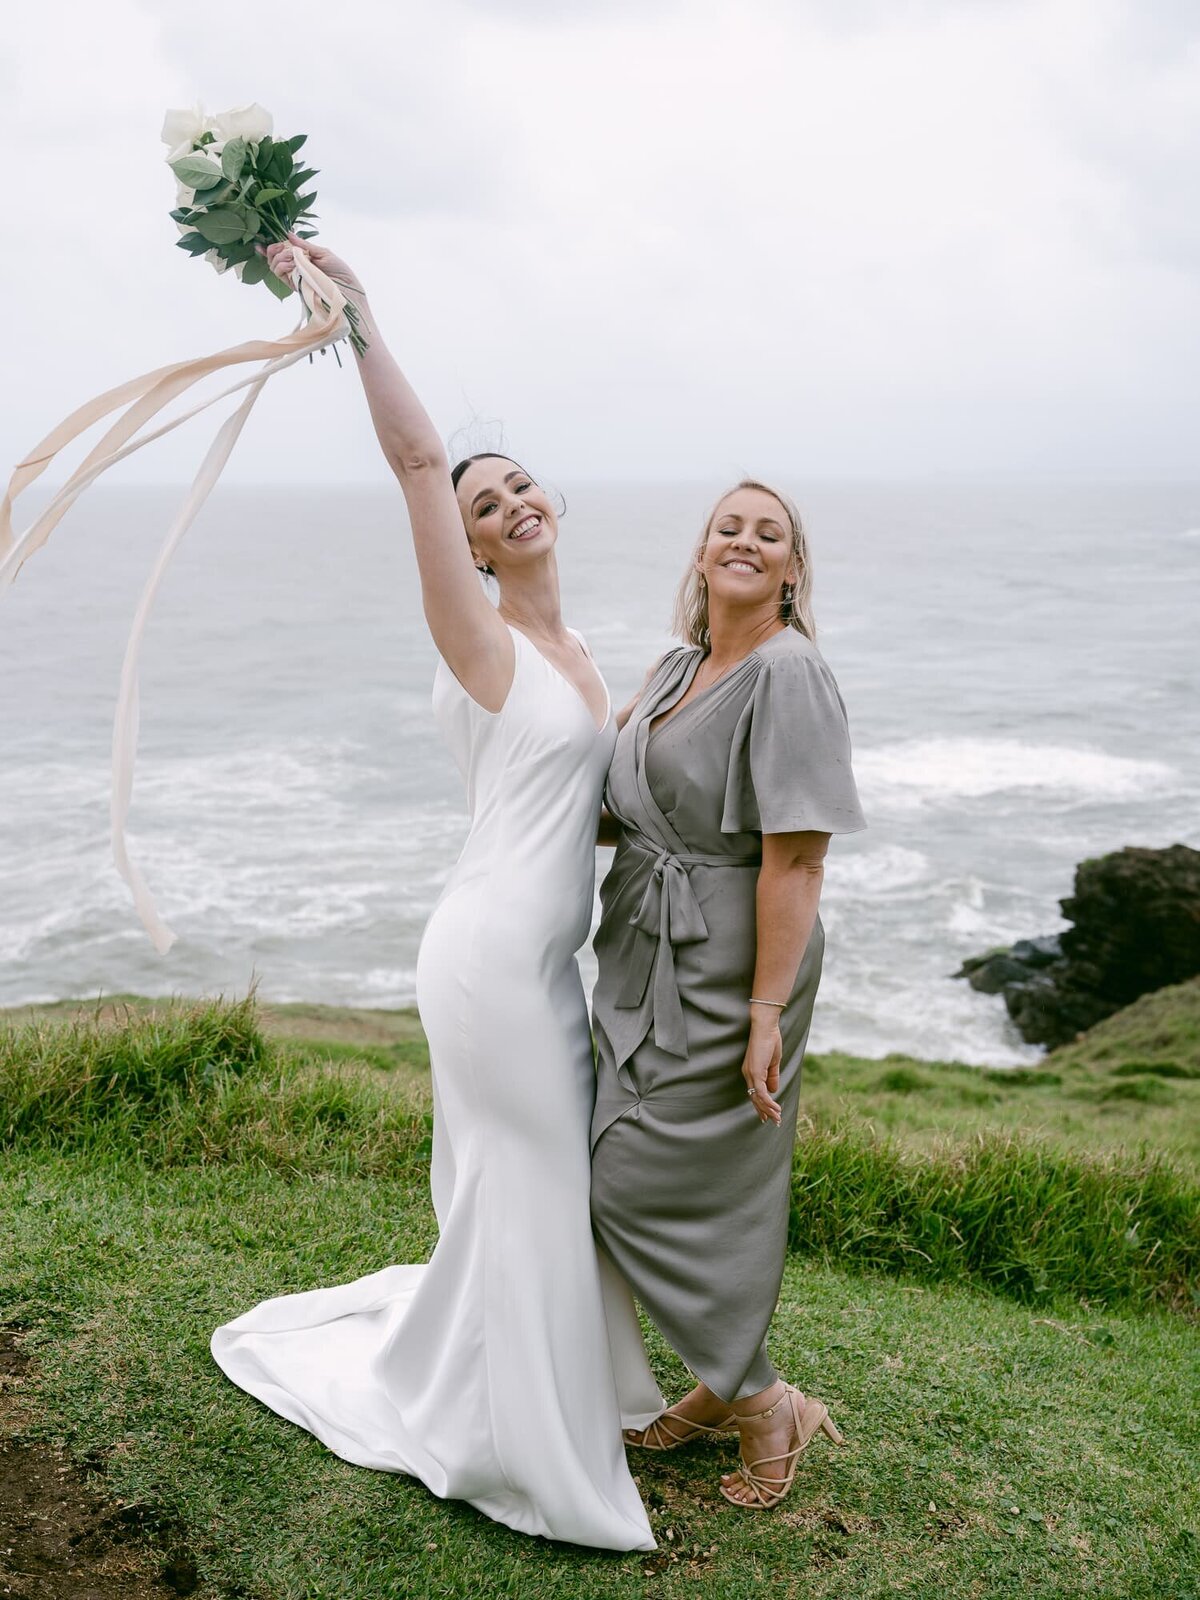 Serenity-Photography-Port-Macquarie-wedding-49